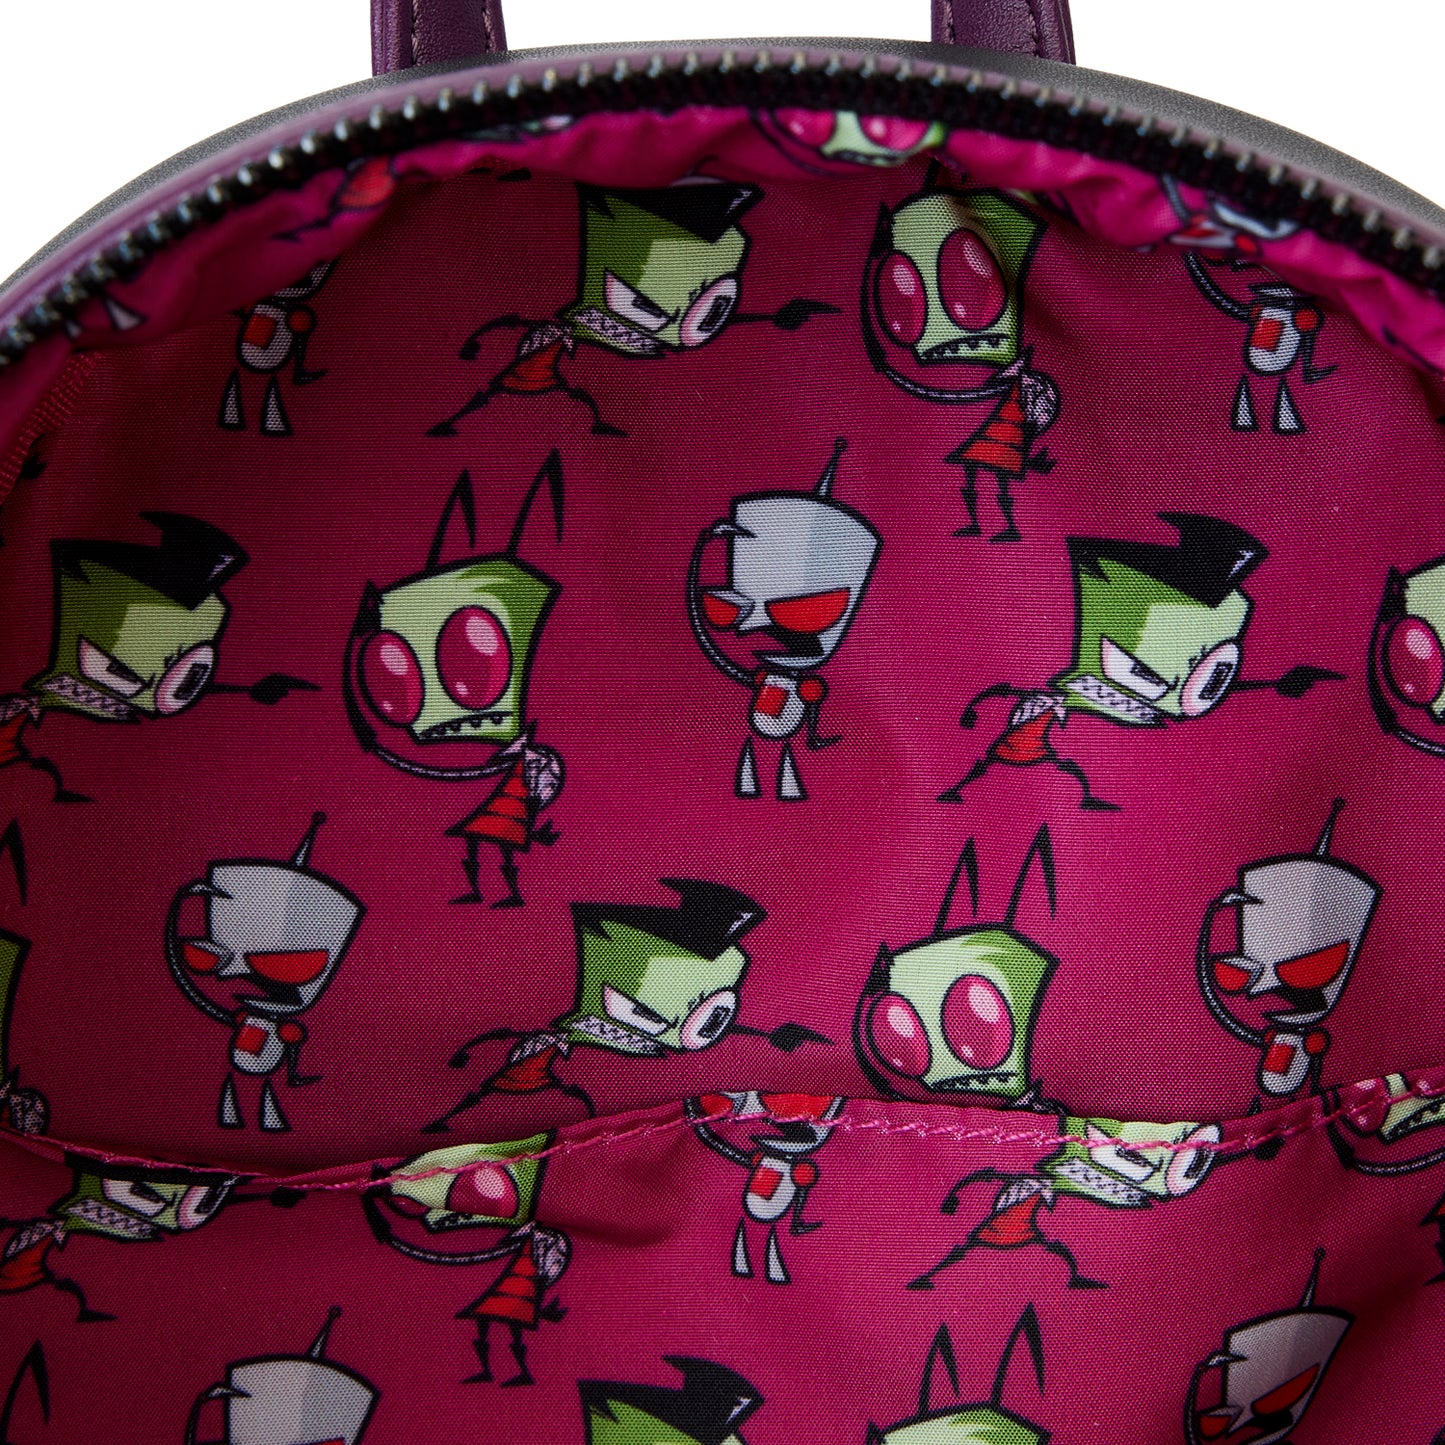 Loungefly Nickelodeon Invader Zip  Secret Lair Mini Backpack